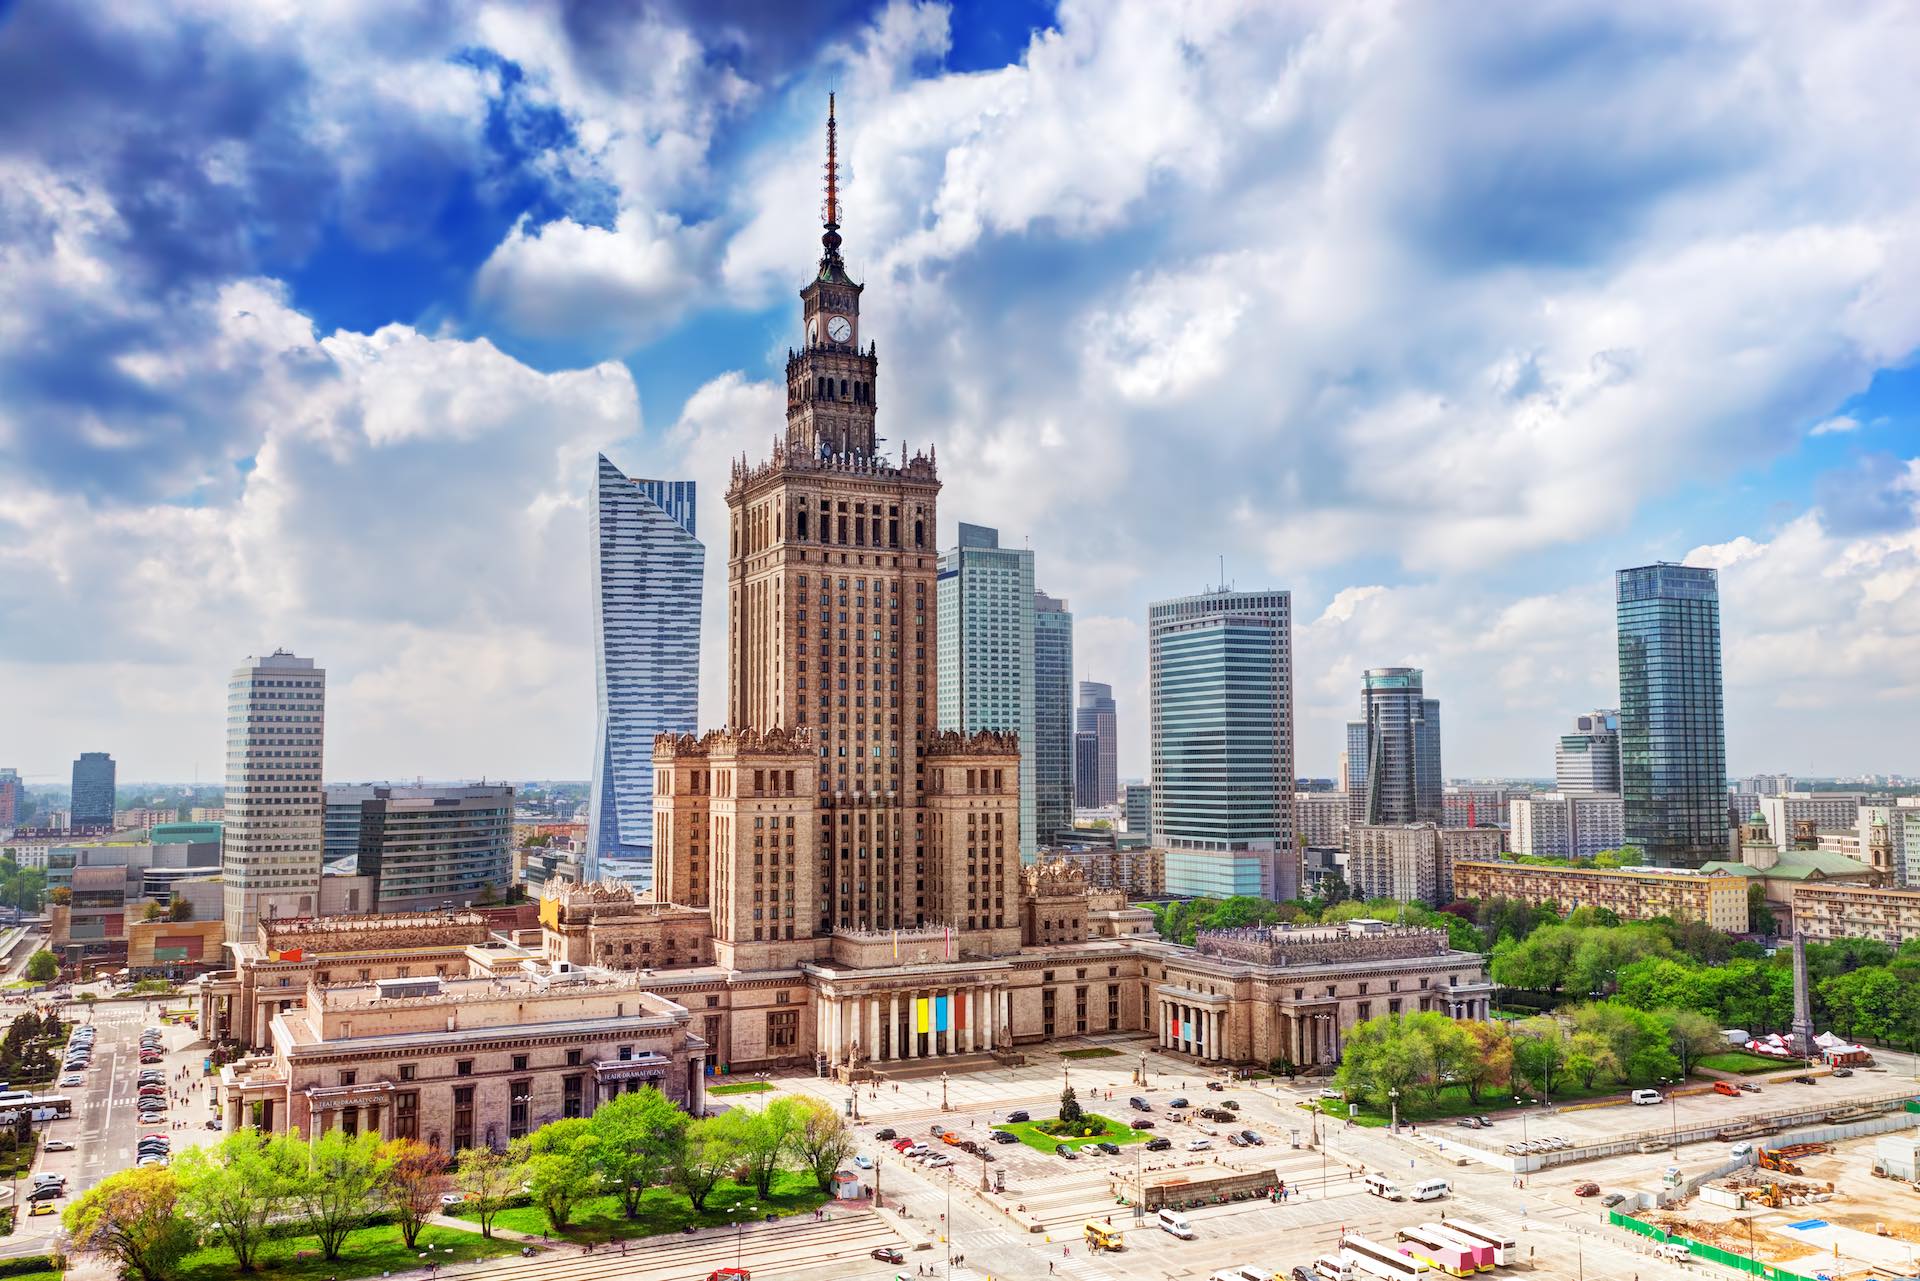 Warsaw-Poland